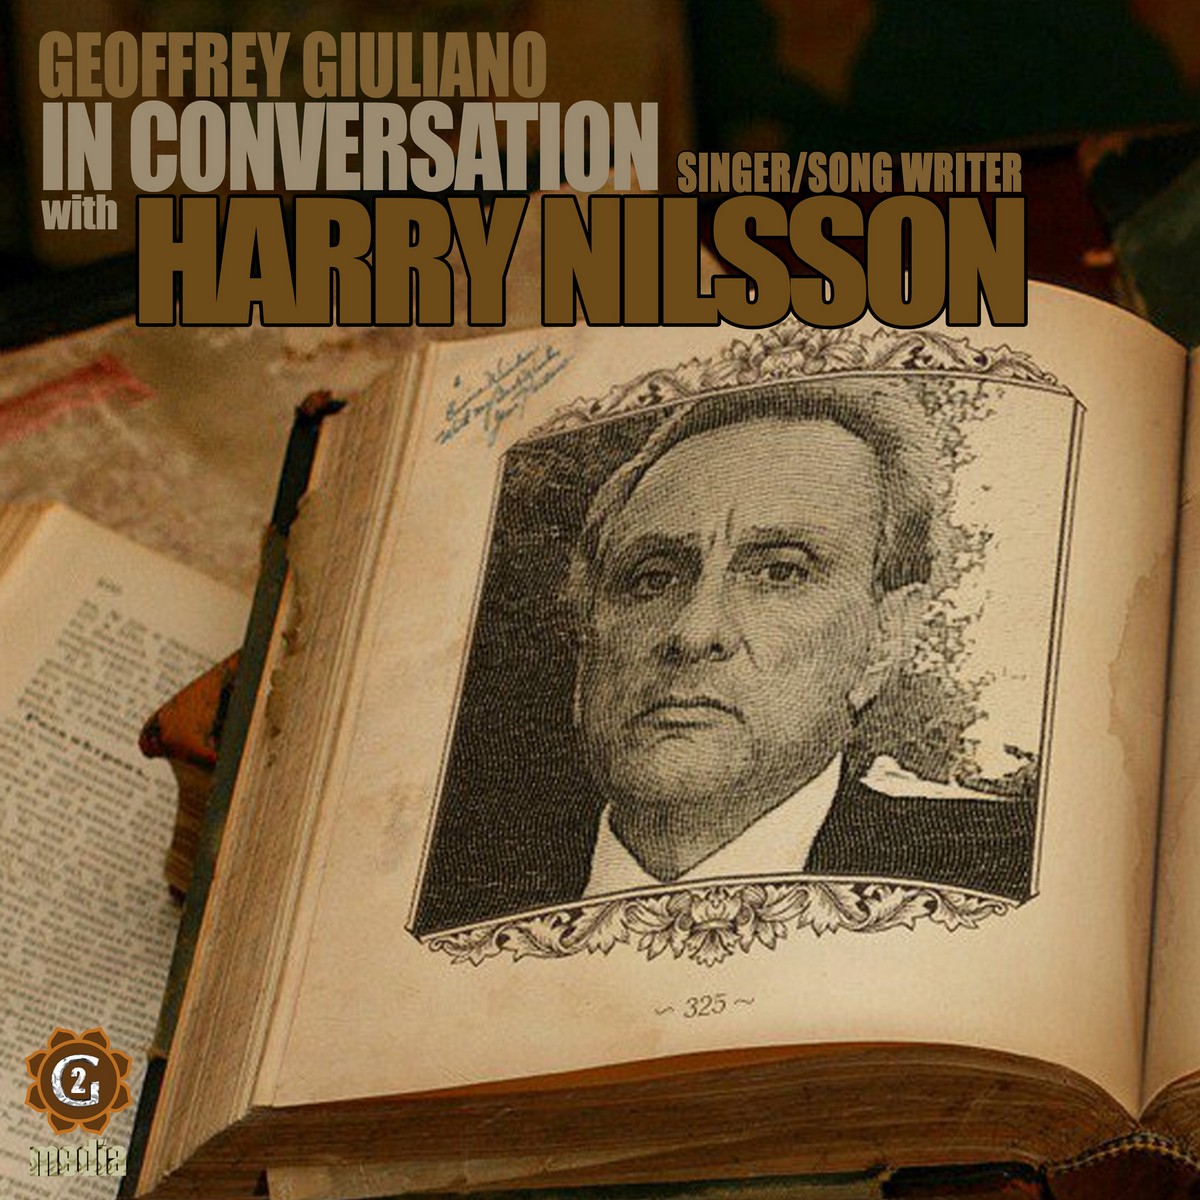 Singer, Songwriter Harry Nilsson in Conversation